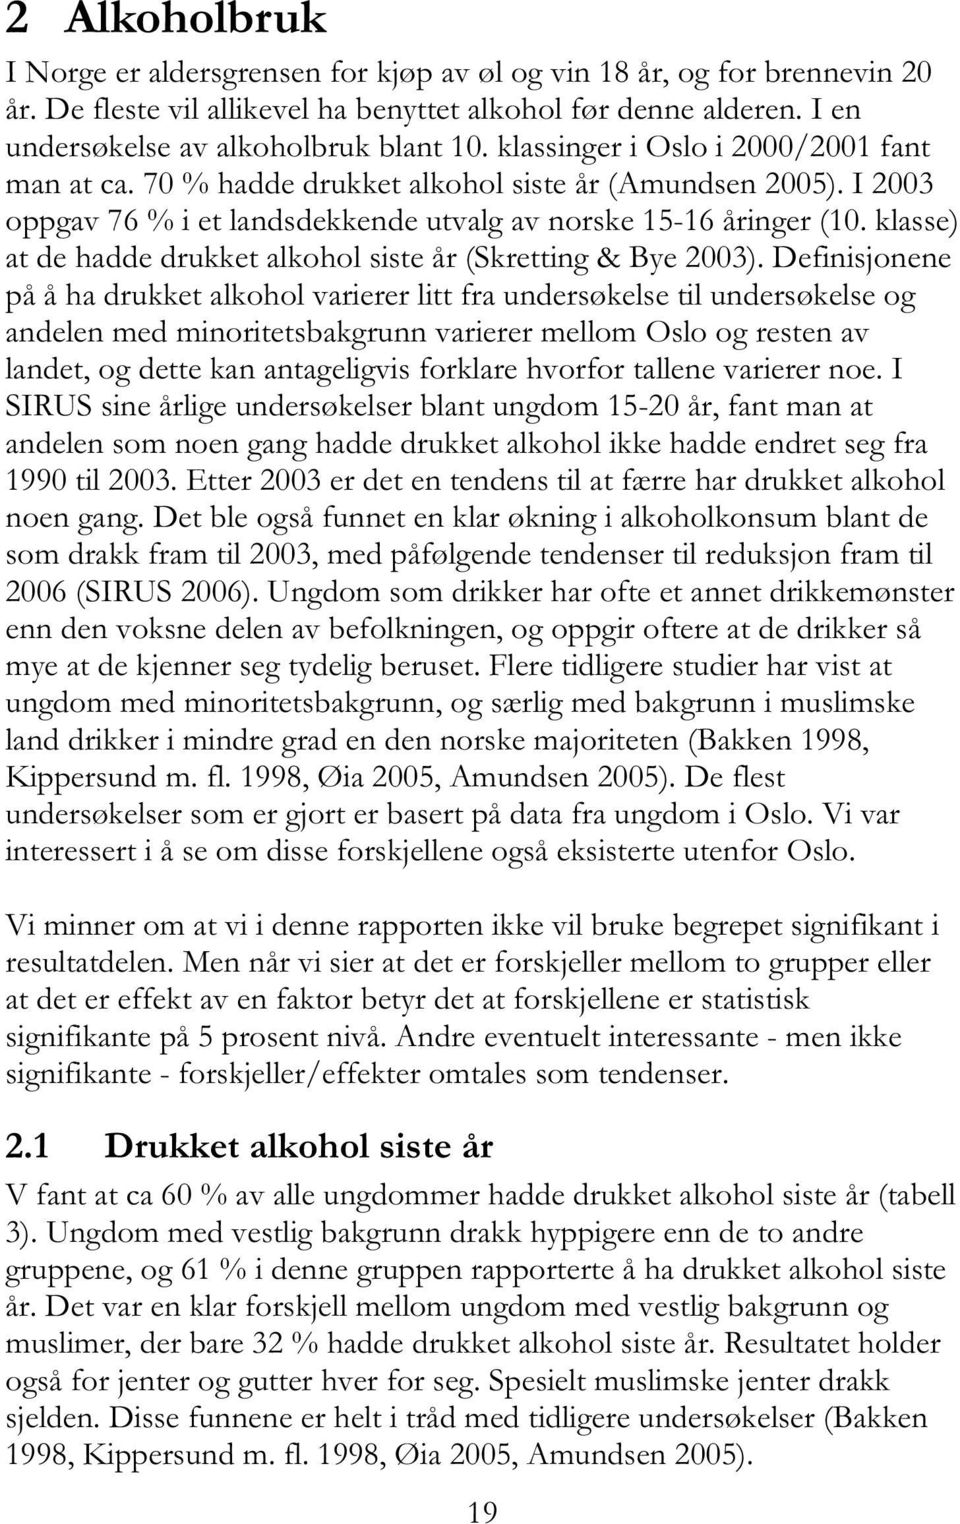 klasse) at de hadde drukket alkohol siste år (Skretting & Bye 2003).